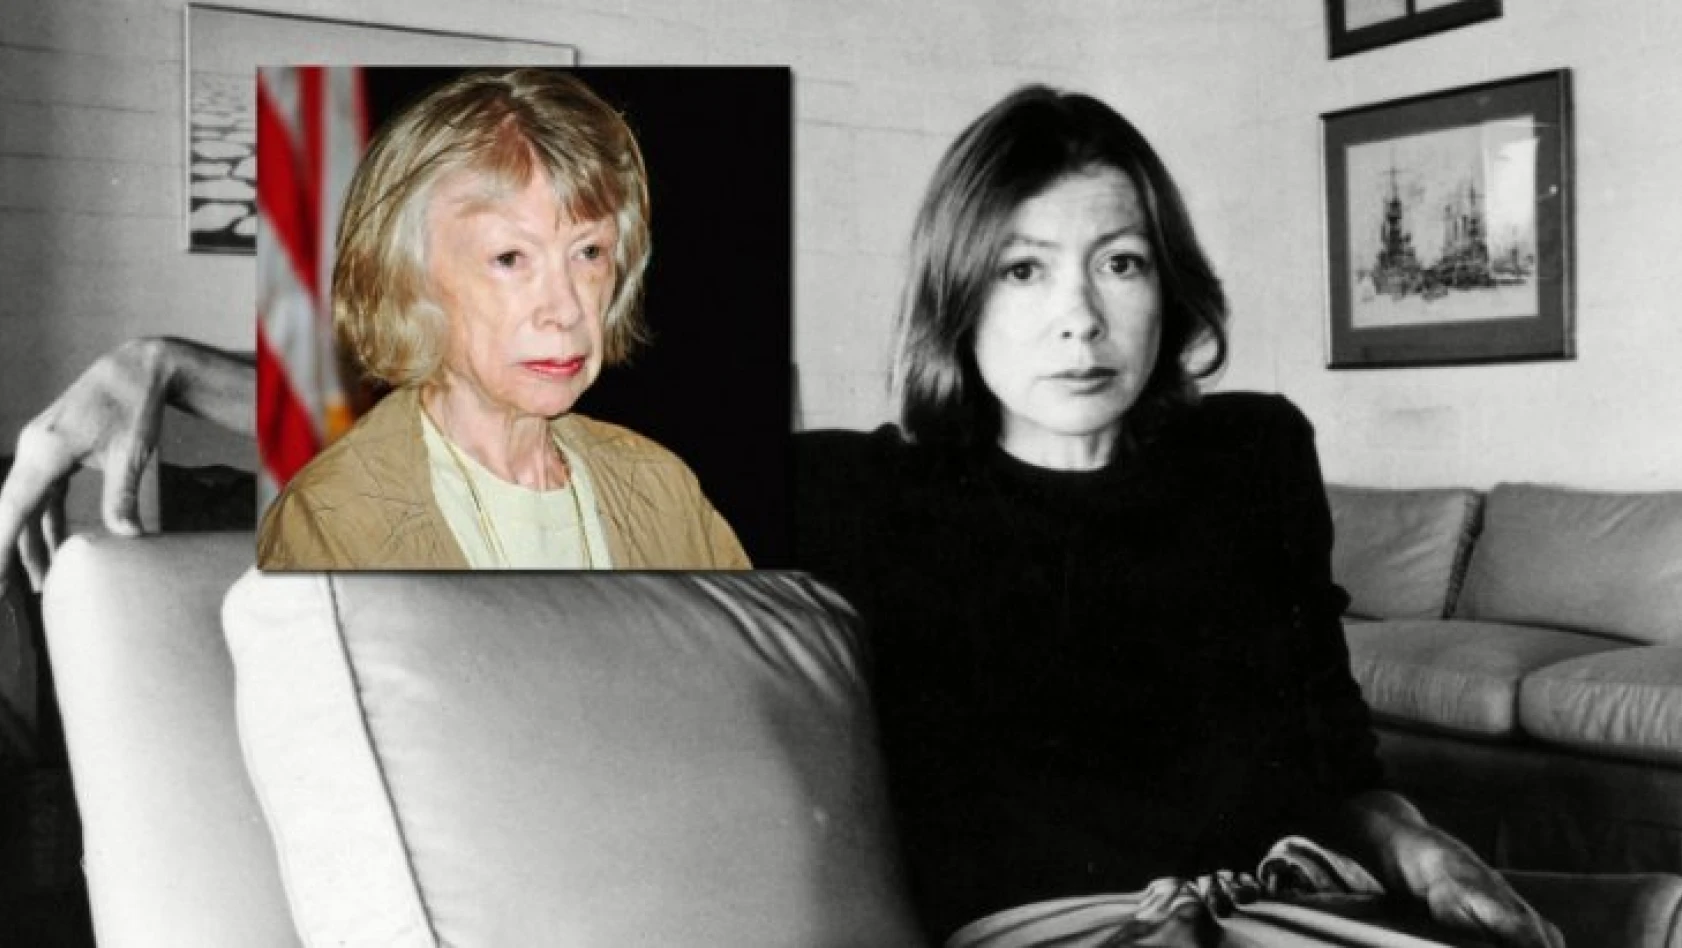 Gazeteci Joan Didion, hayatını kaybetti